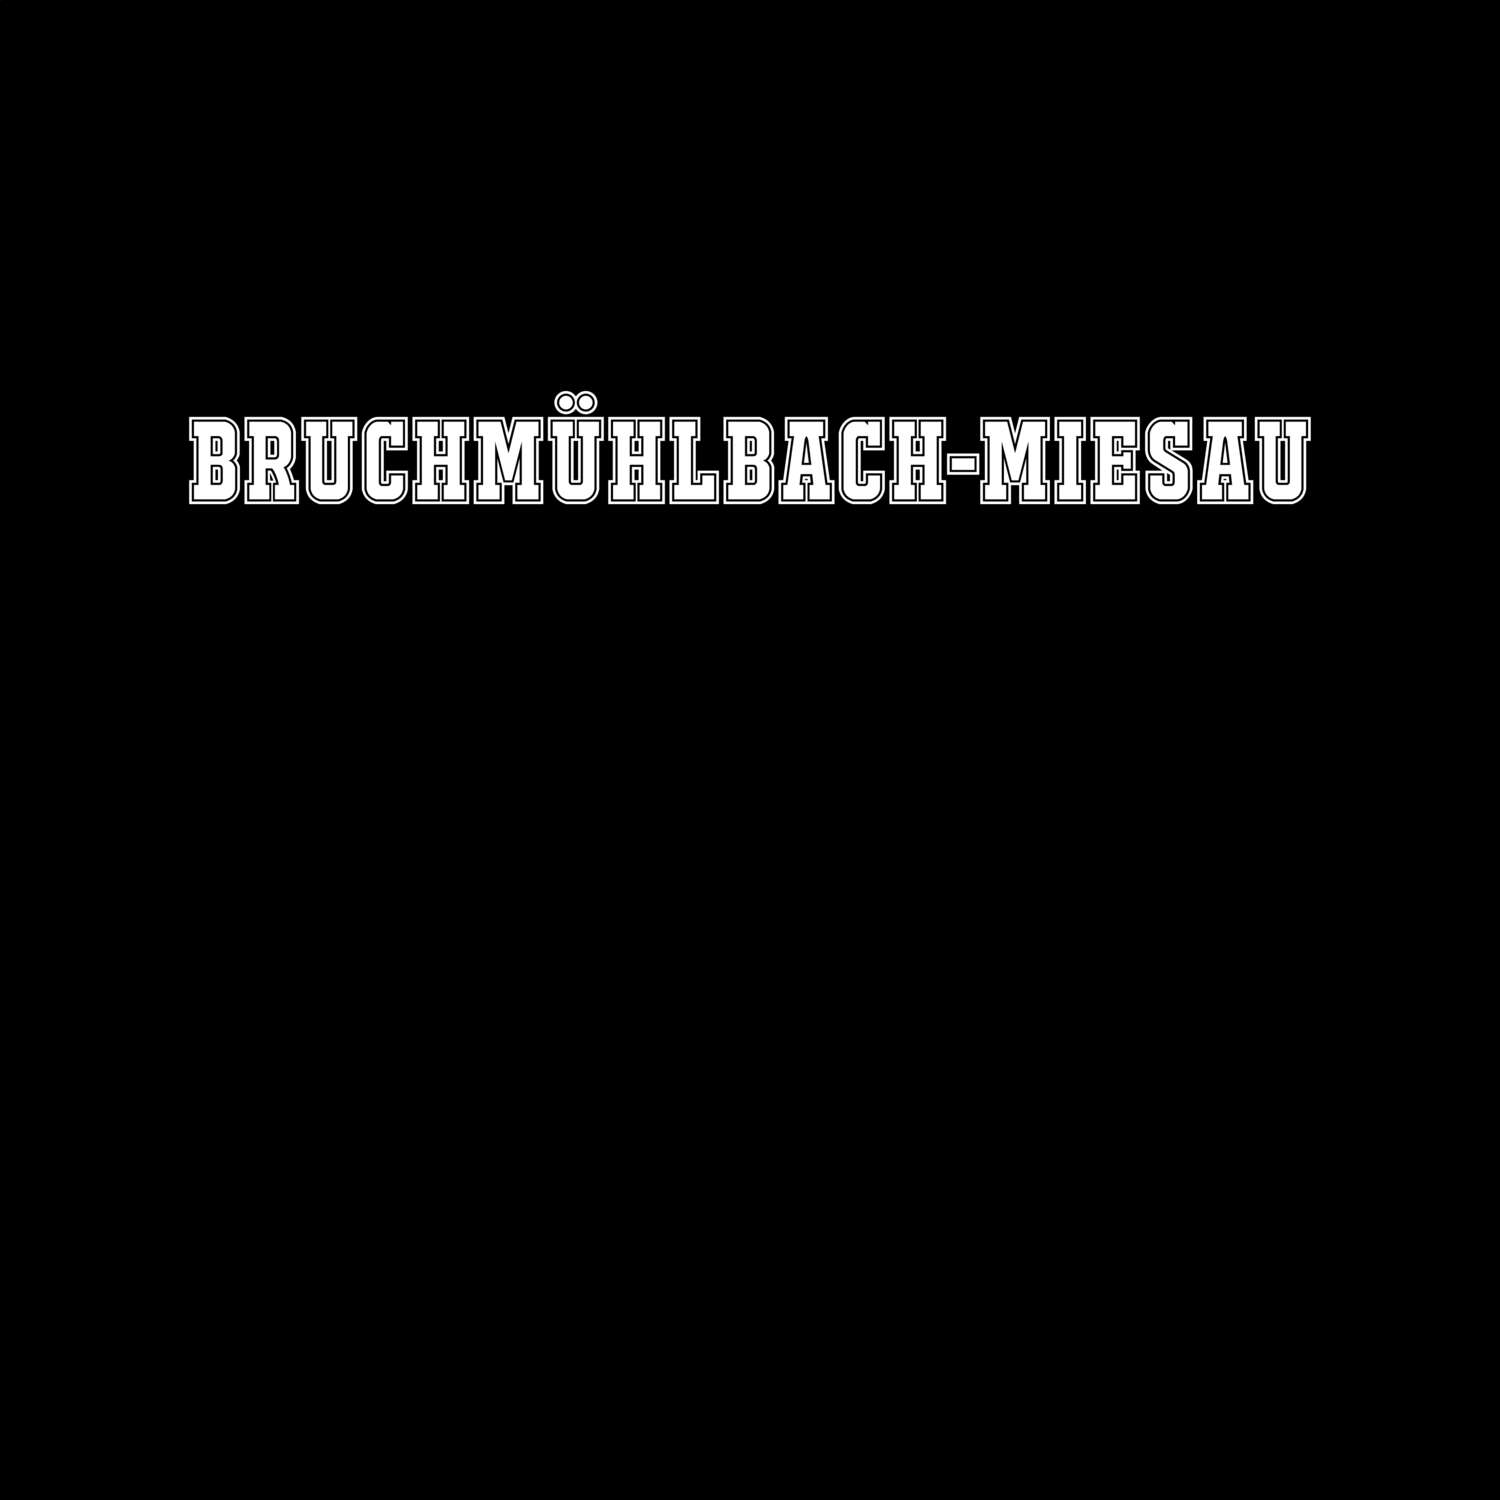 Bruchmühlbach-Miesau T-Shirt »Classic«